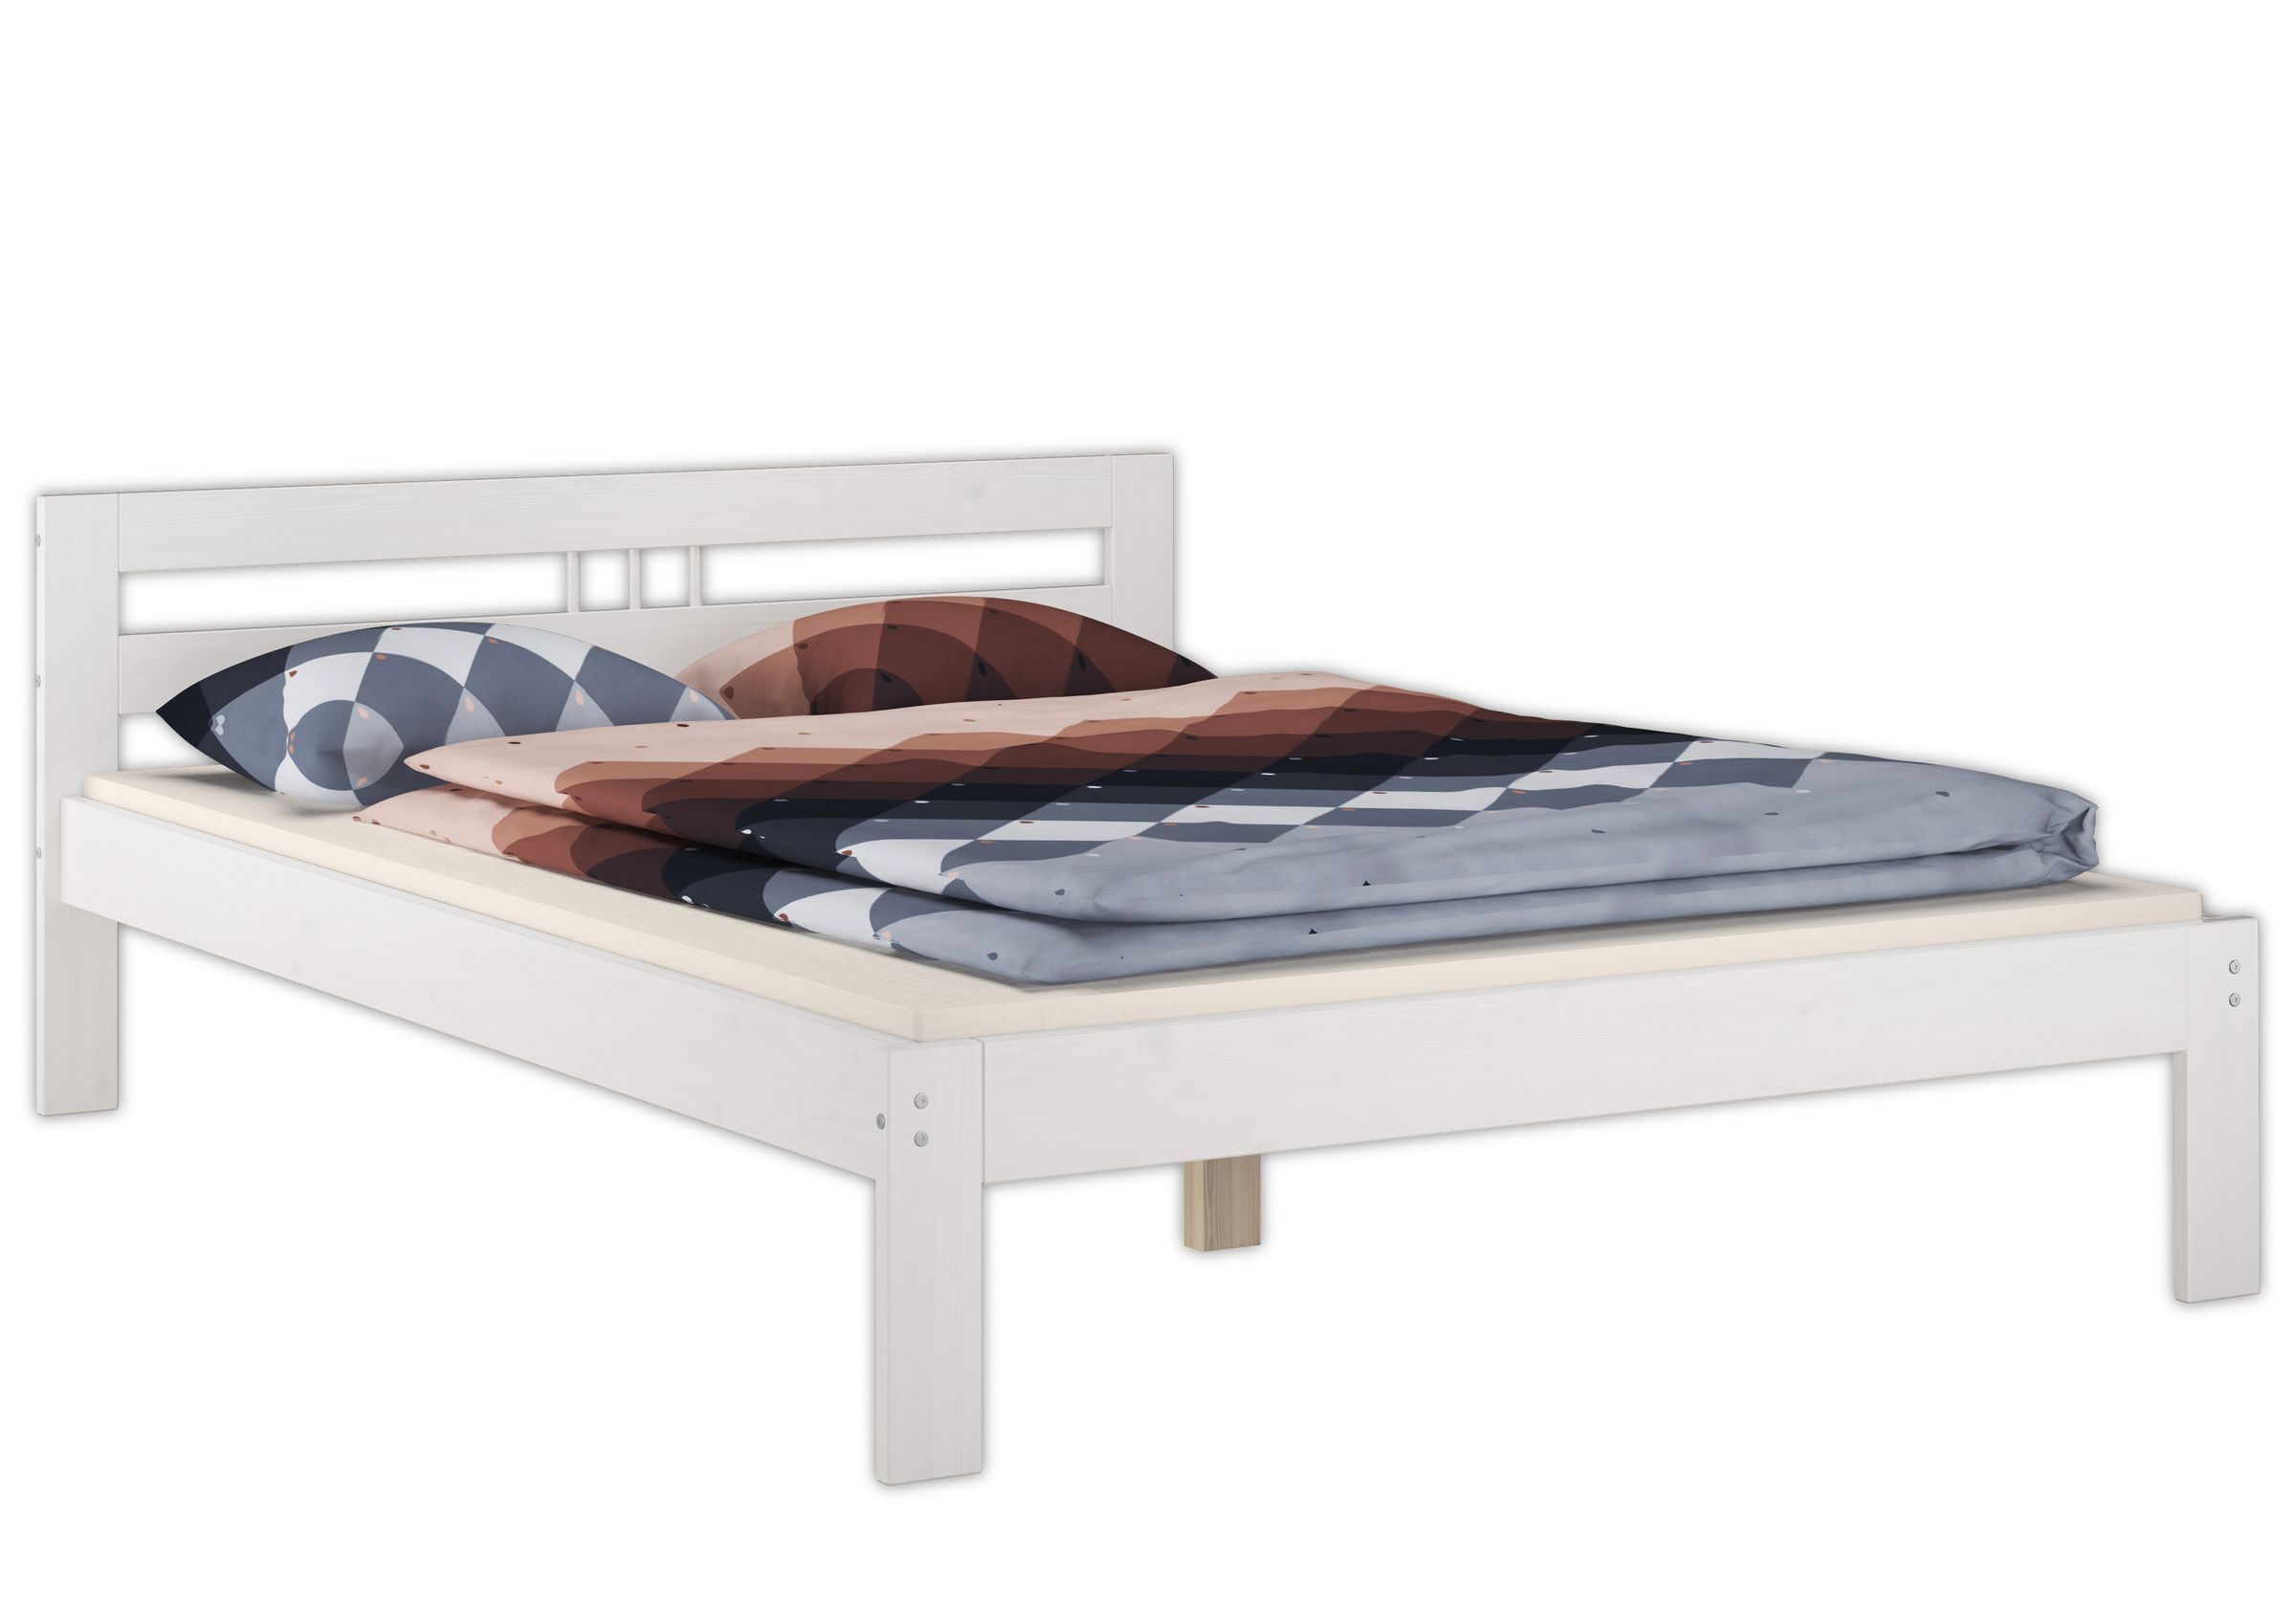 Bettgestell Kiefer massiv weiß Doppelbett 140x200 Französisches Bett Zubehör wählbar V-60.64-14W